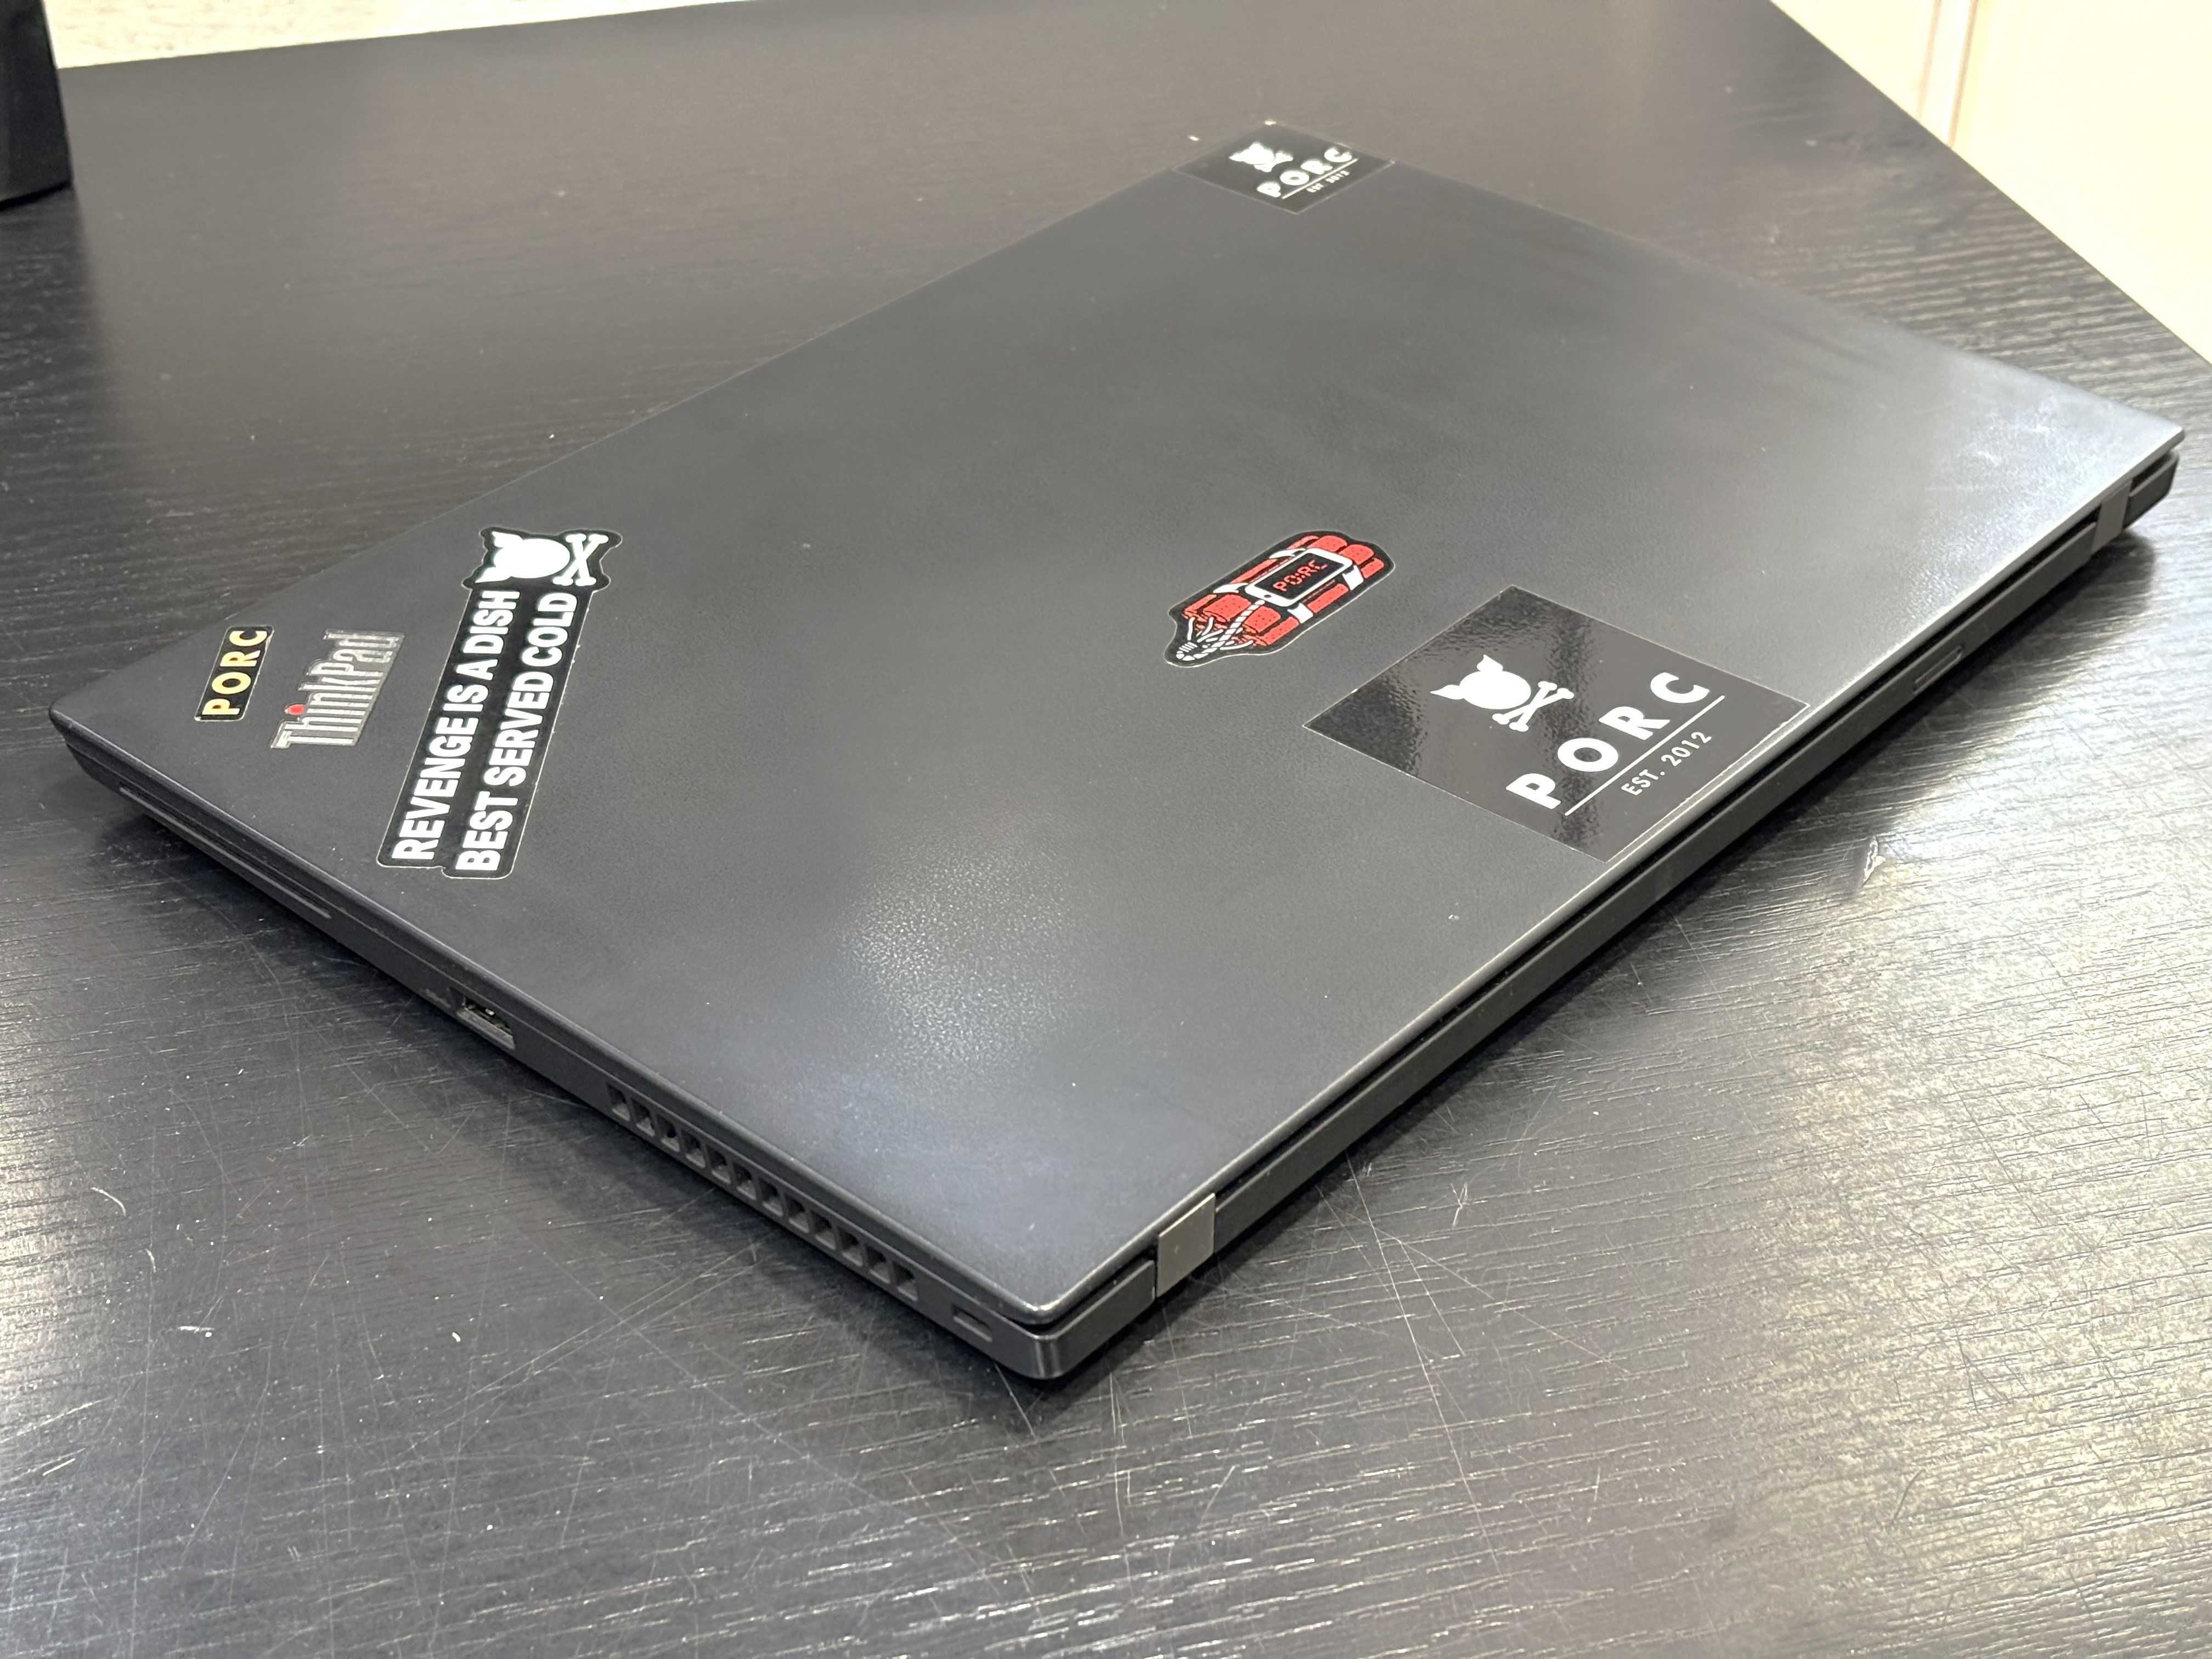 Hope Amanet P8 Laptop Lenovo T480s Intel Core i7